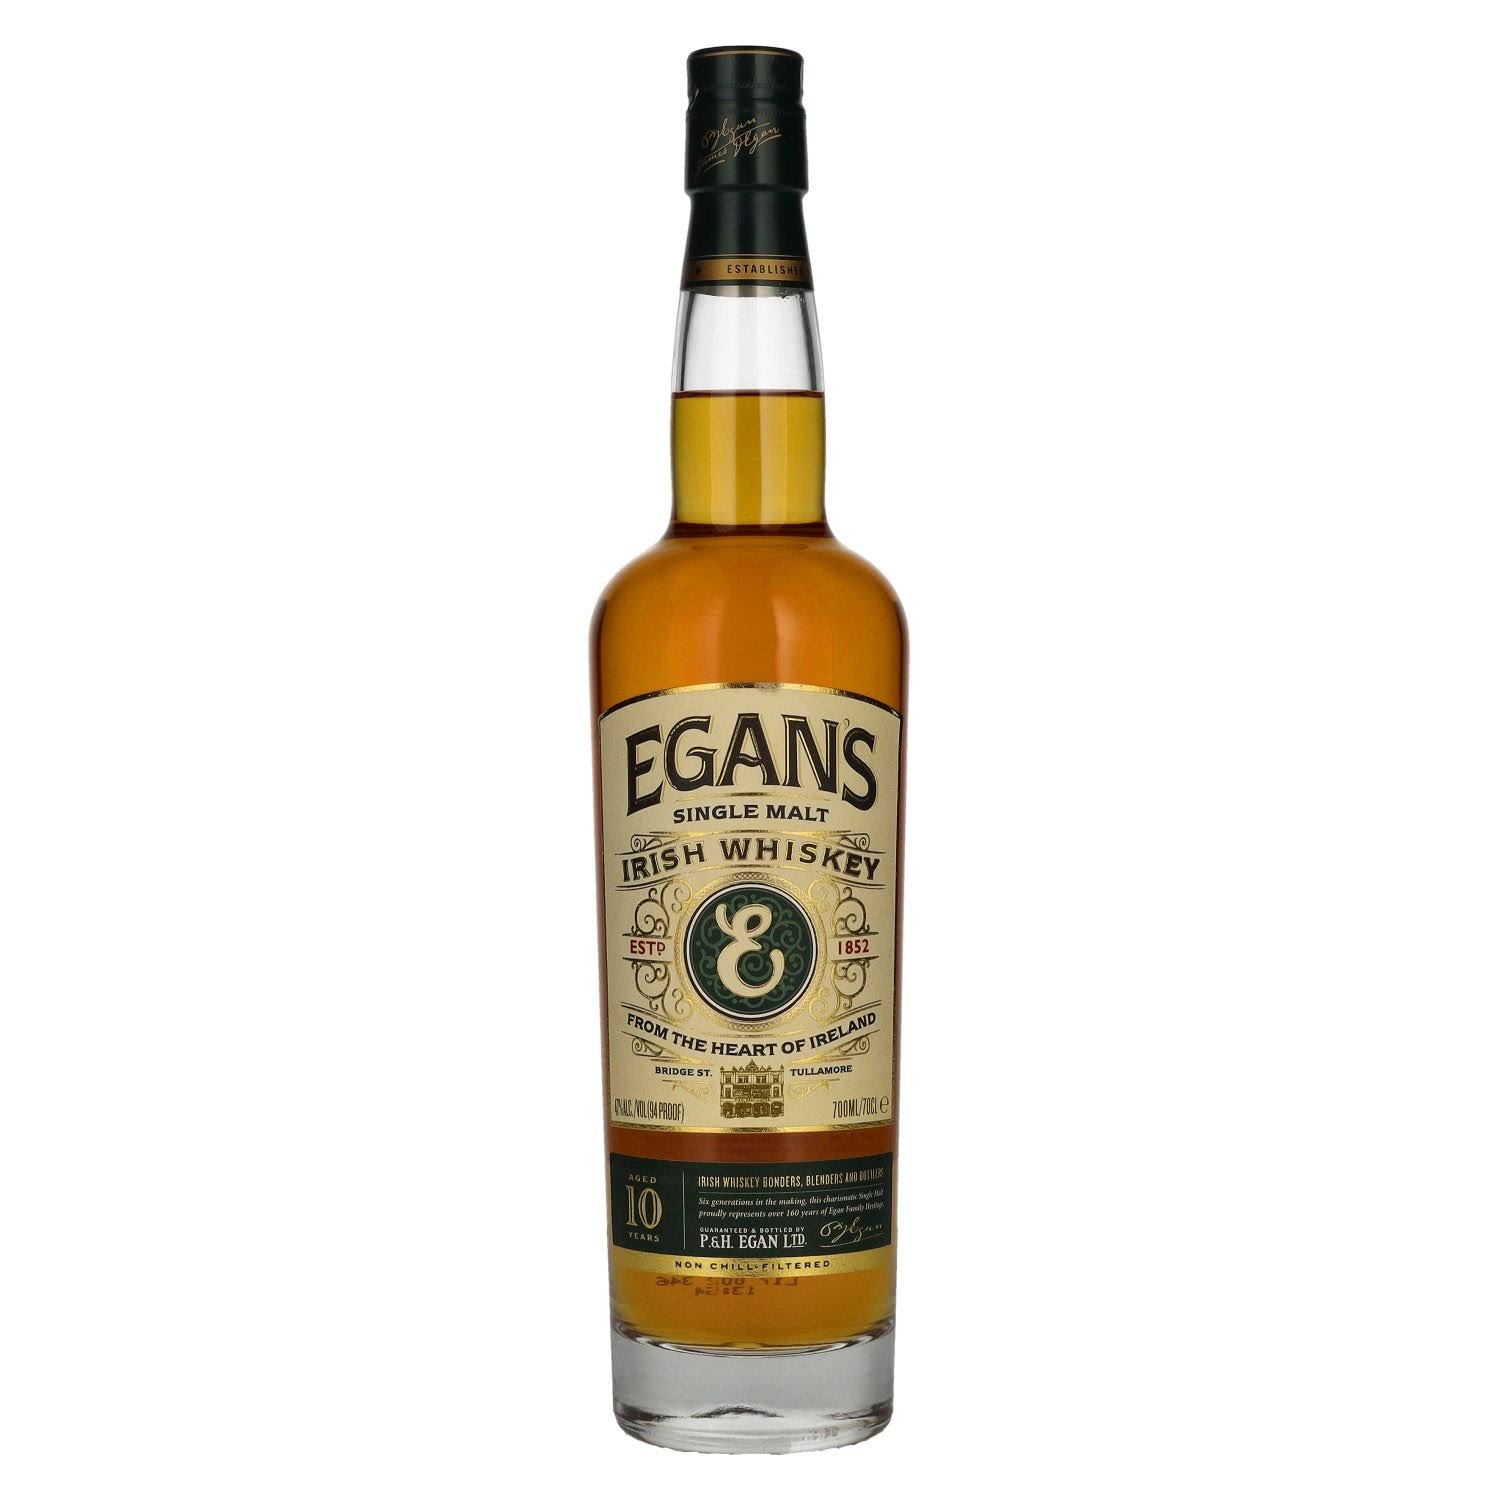 Egan's 10 Year Old Single Malt Single Malt Whiskey